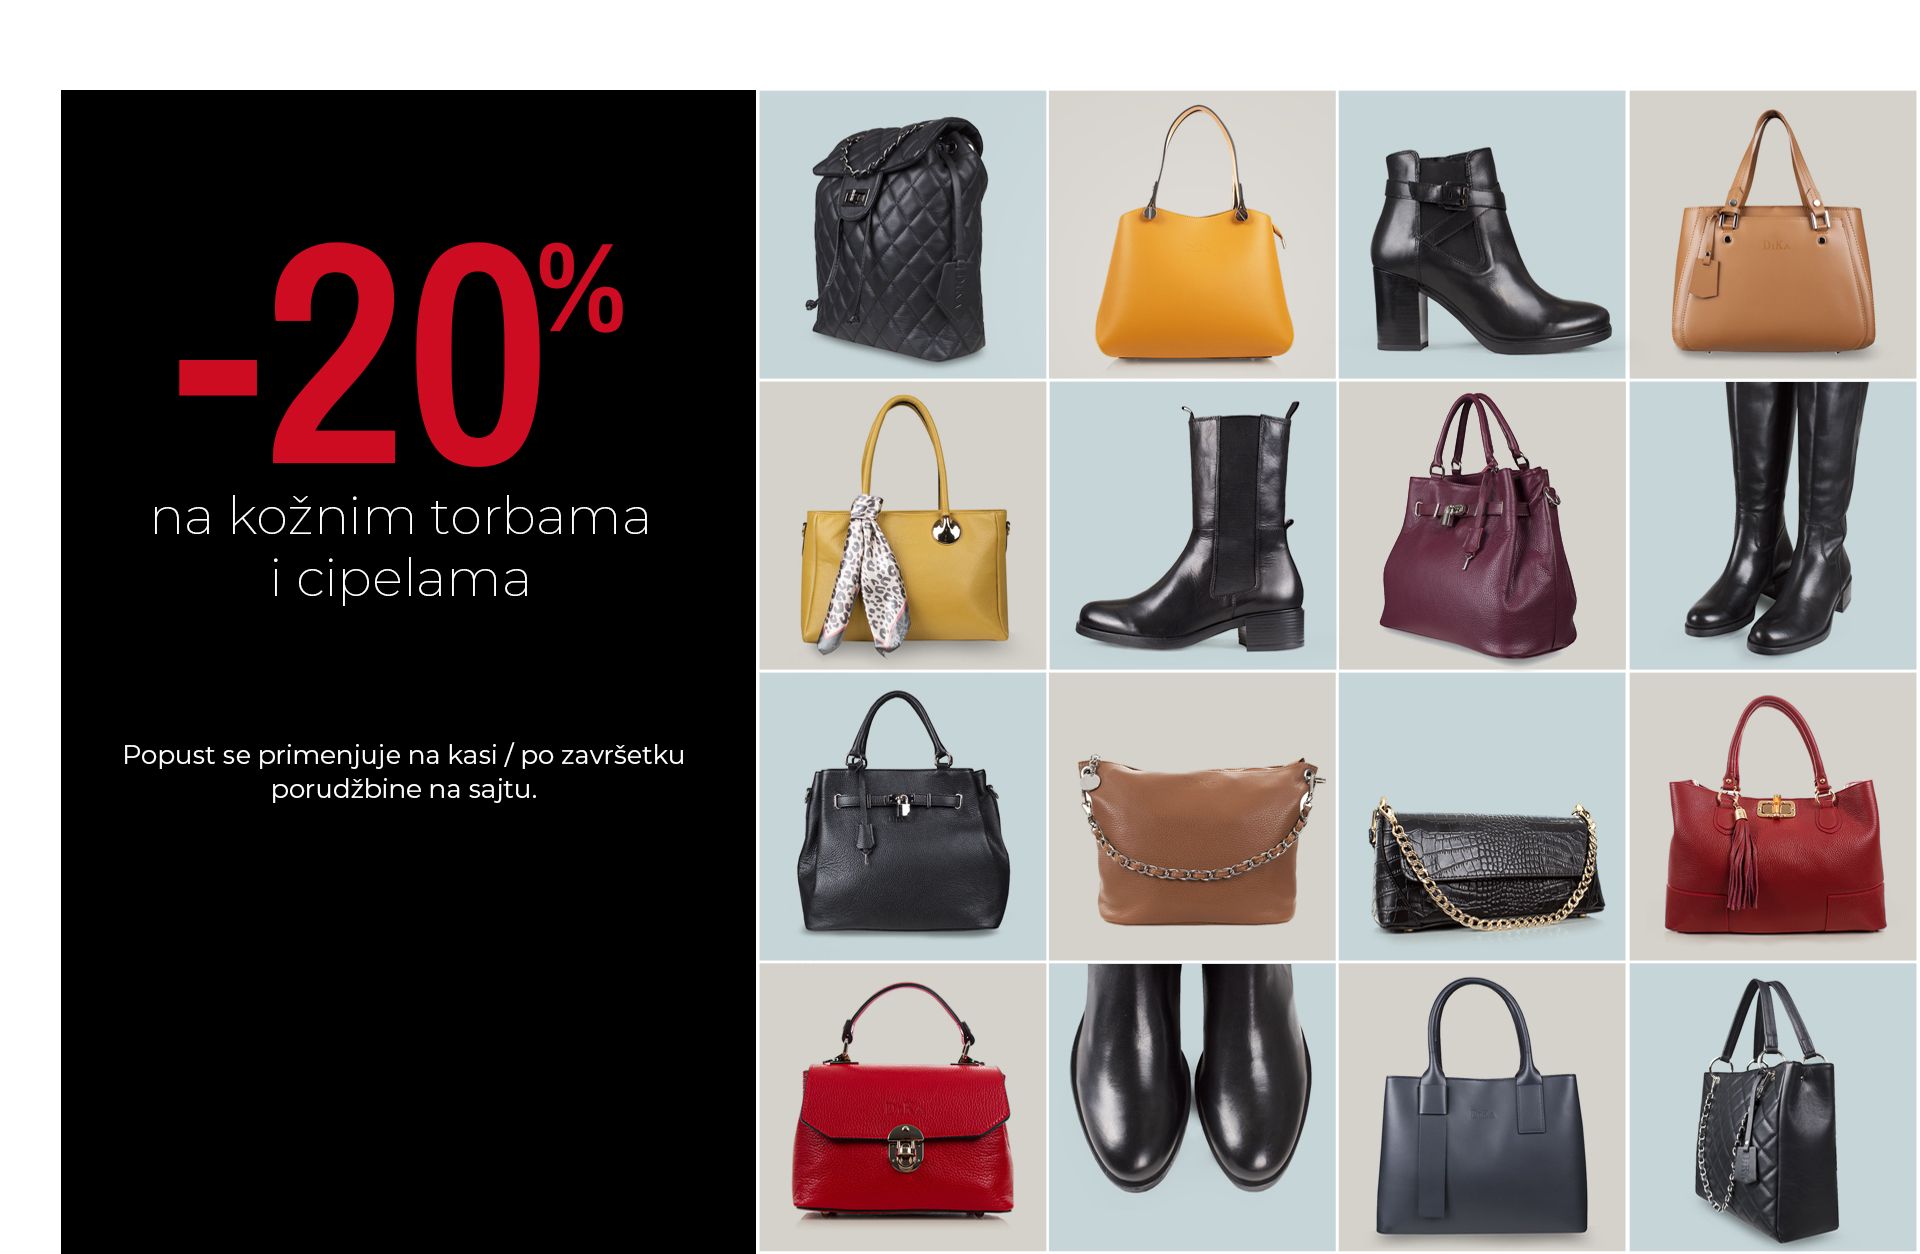 Leather Goods -20%